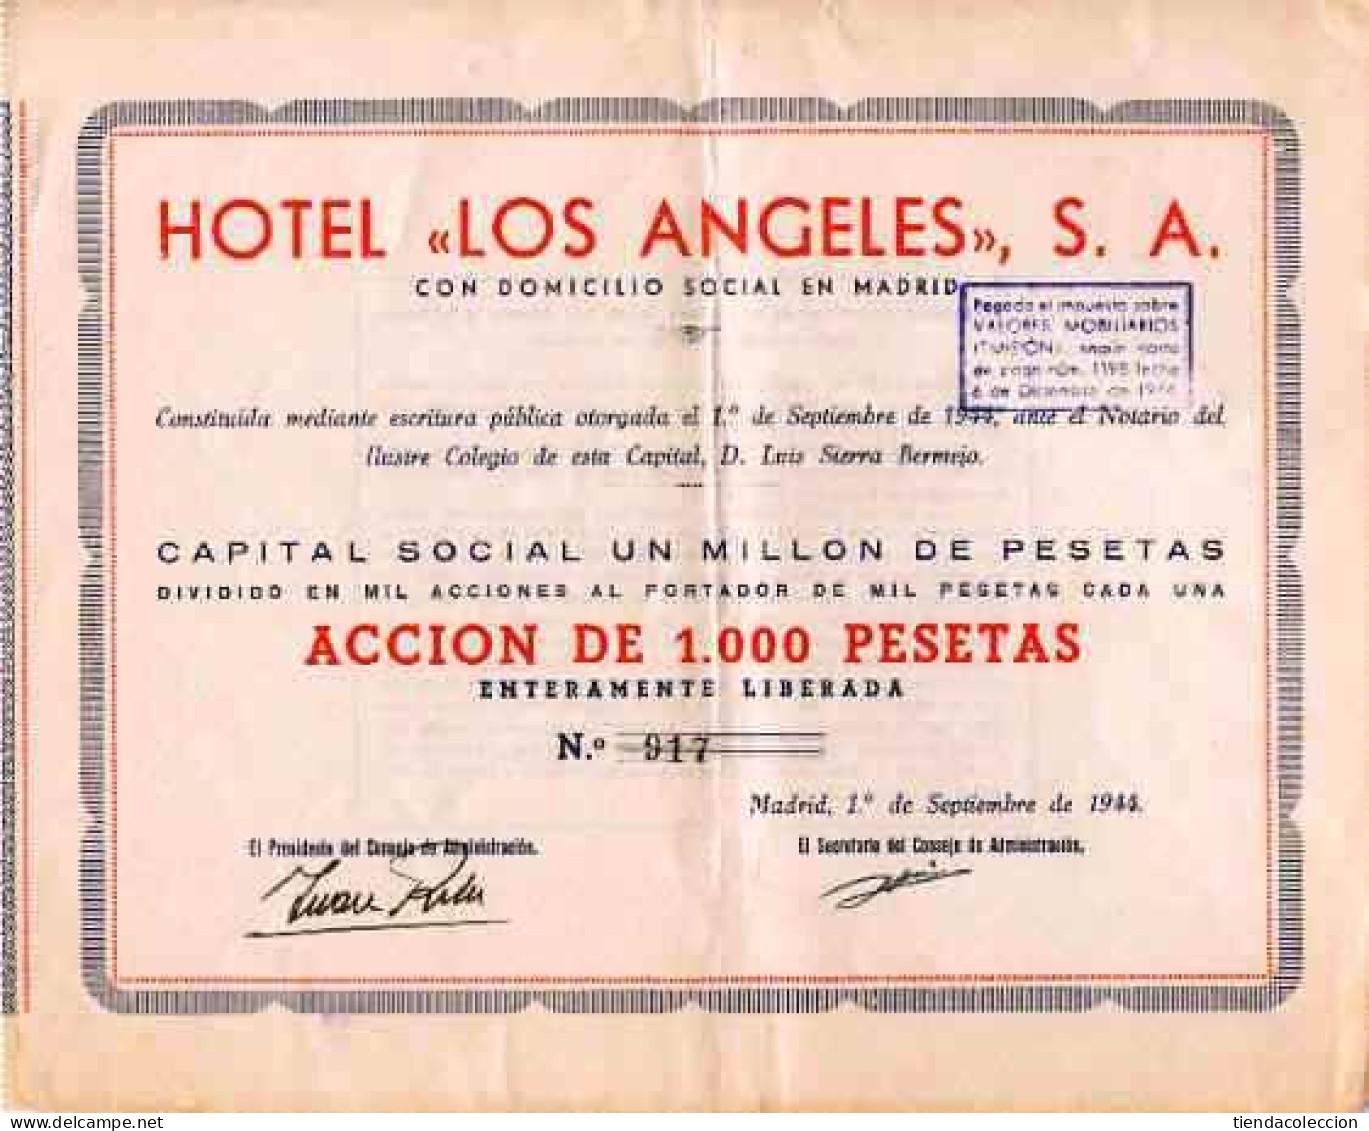 Hotel Los Ángeles, S. A. - Toerisme